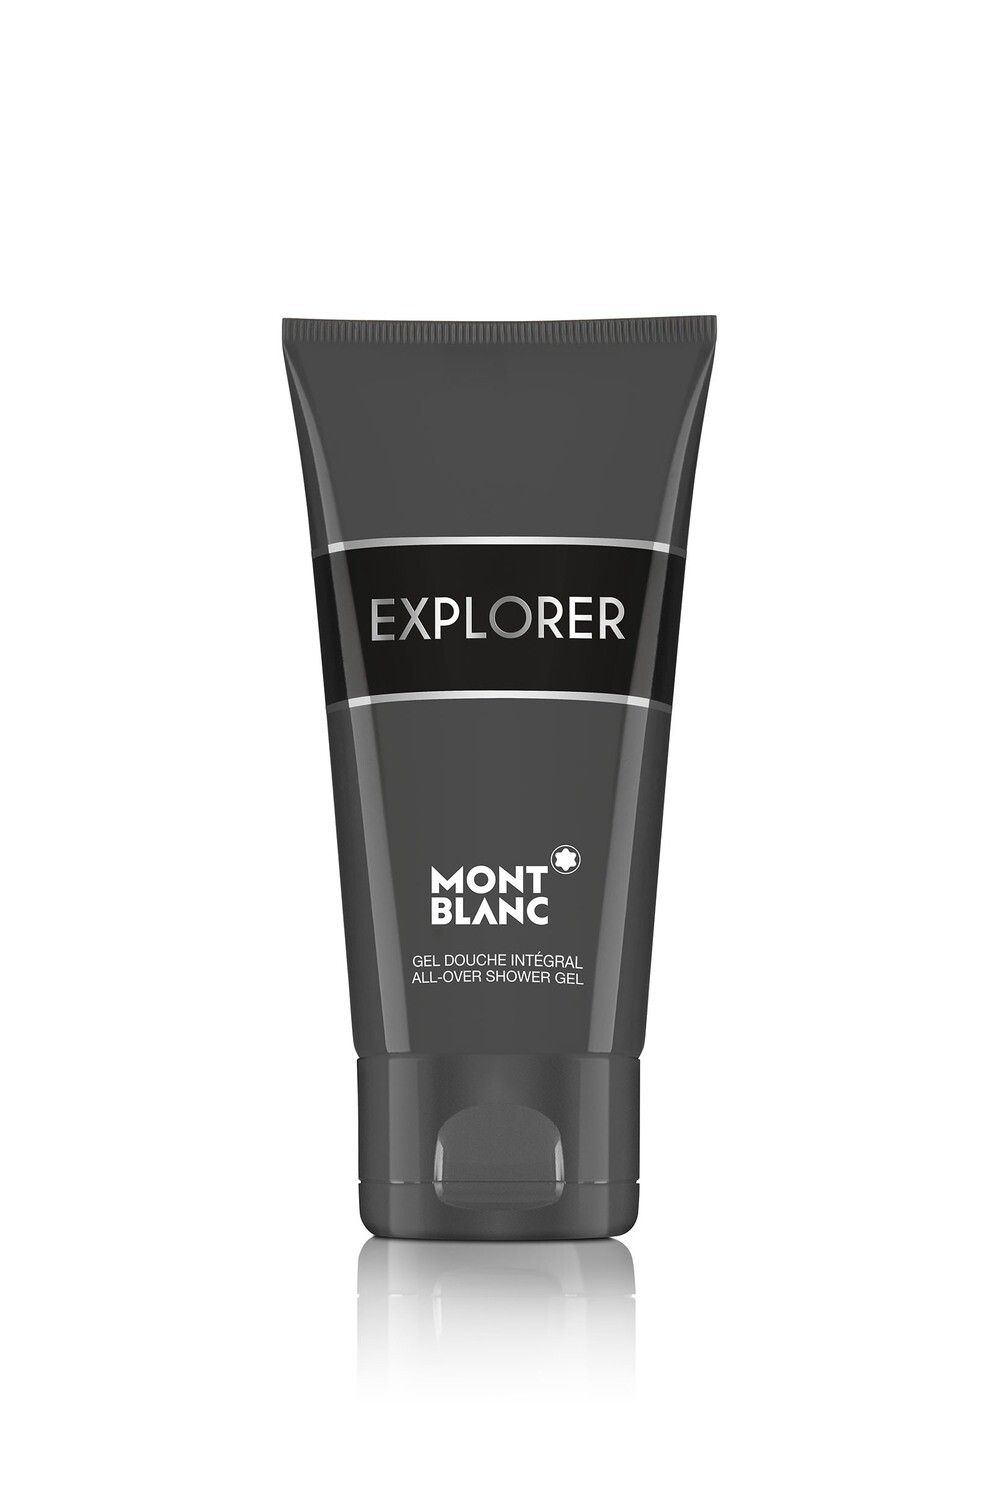 Montblanc Explorer Shower gel